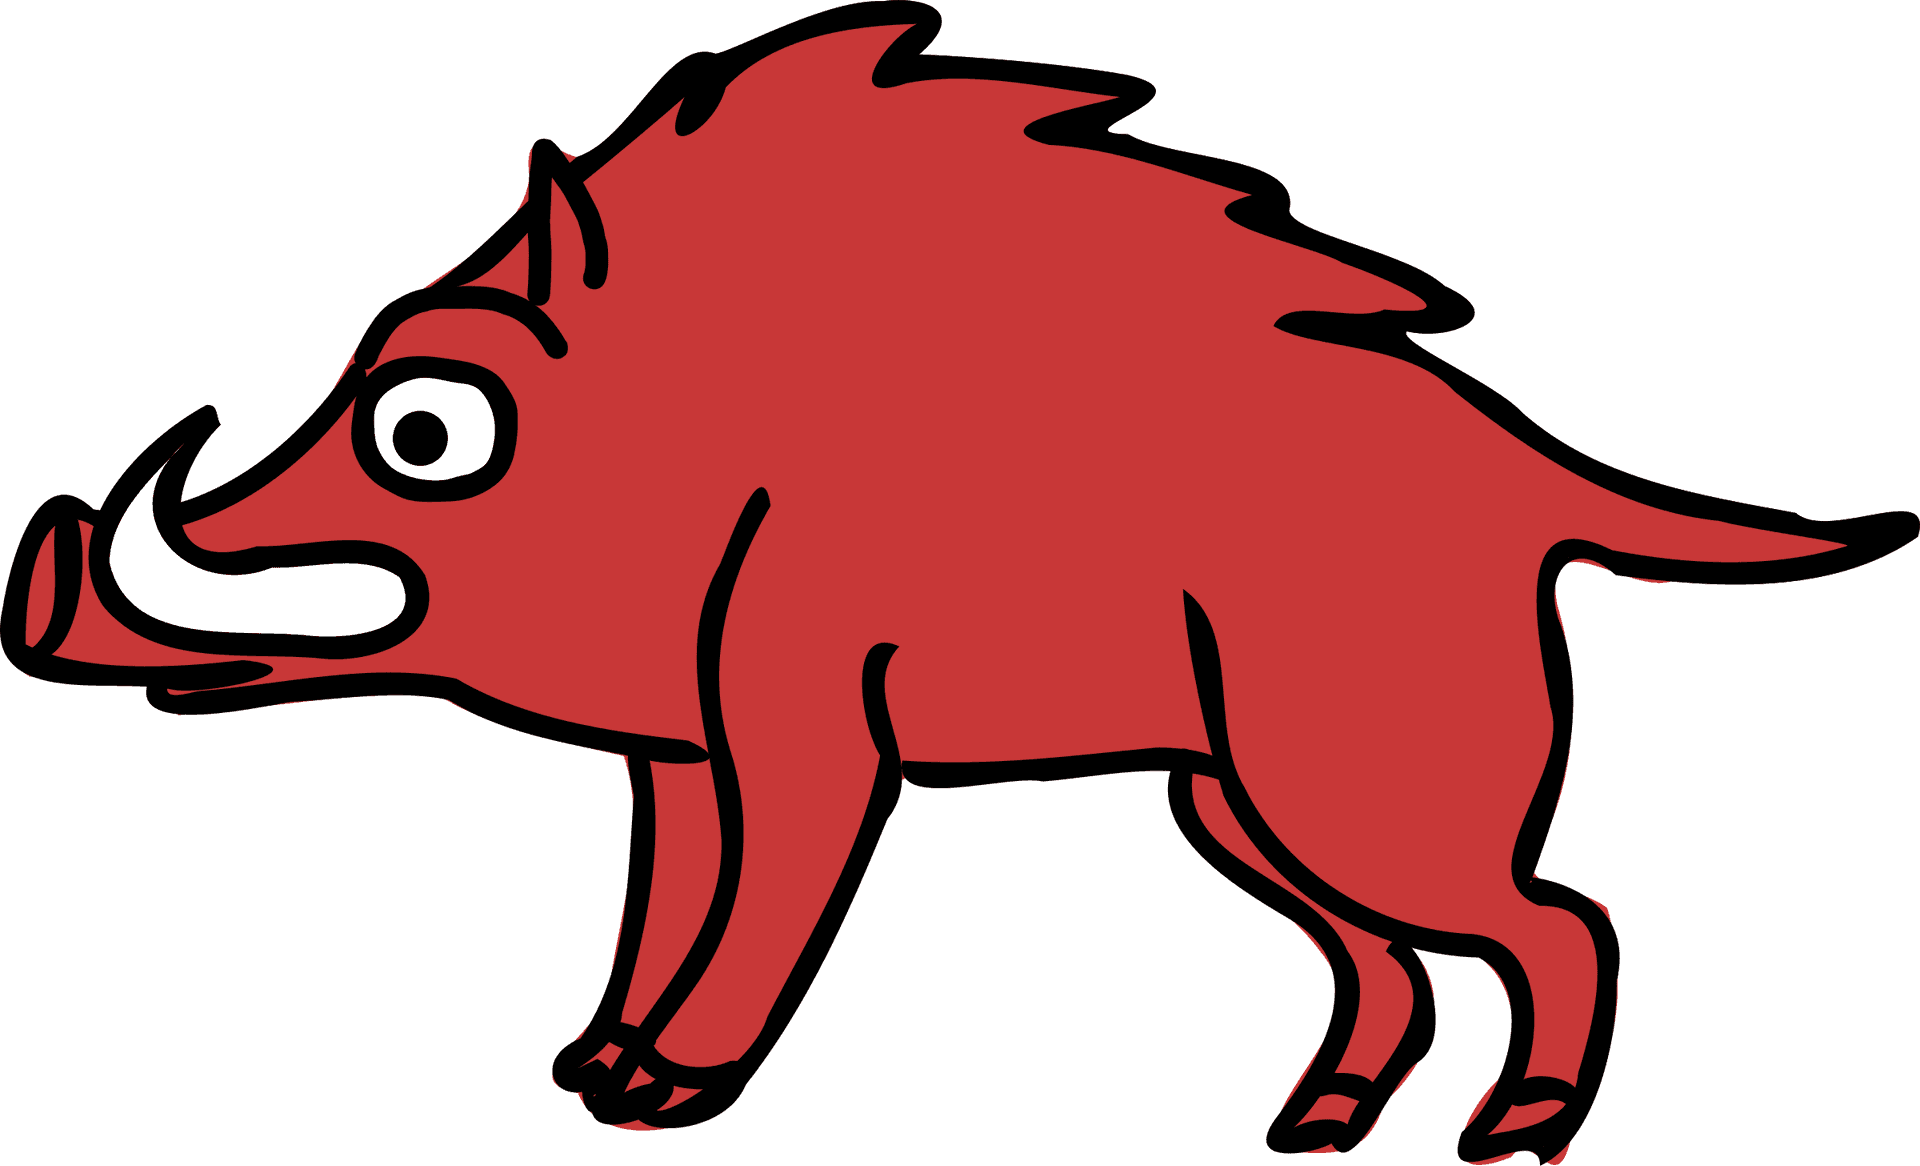 Cartoon Red Boar Illustration PNG image